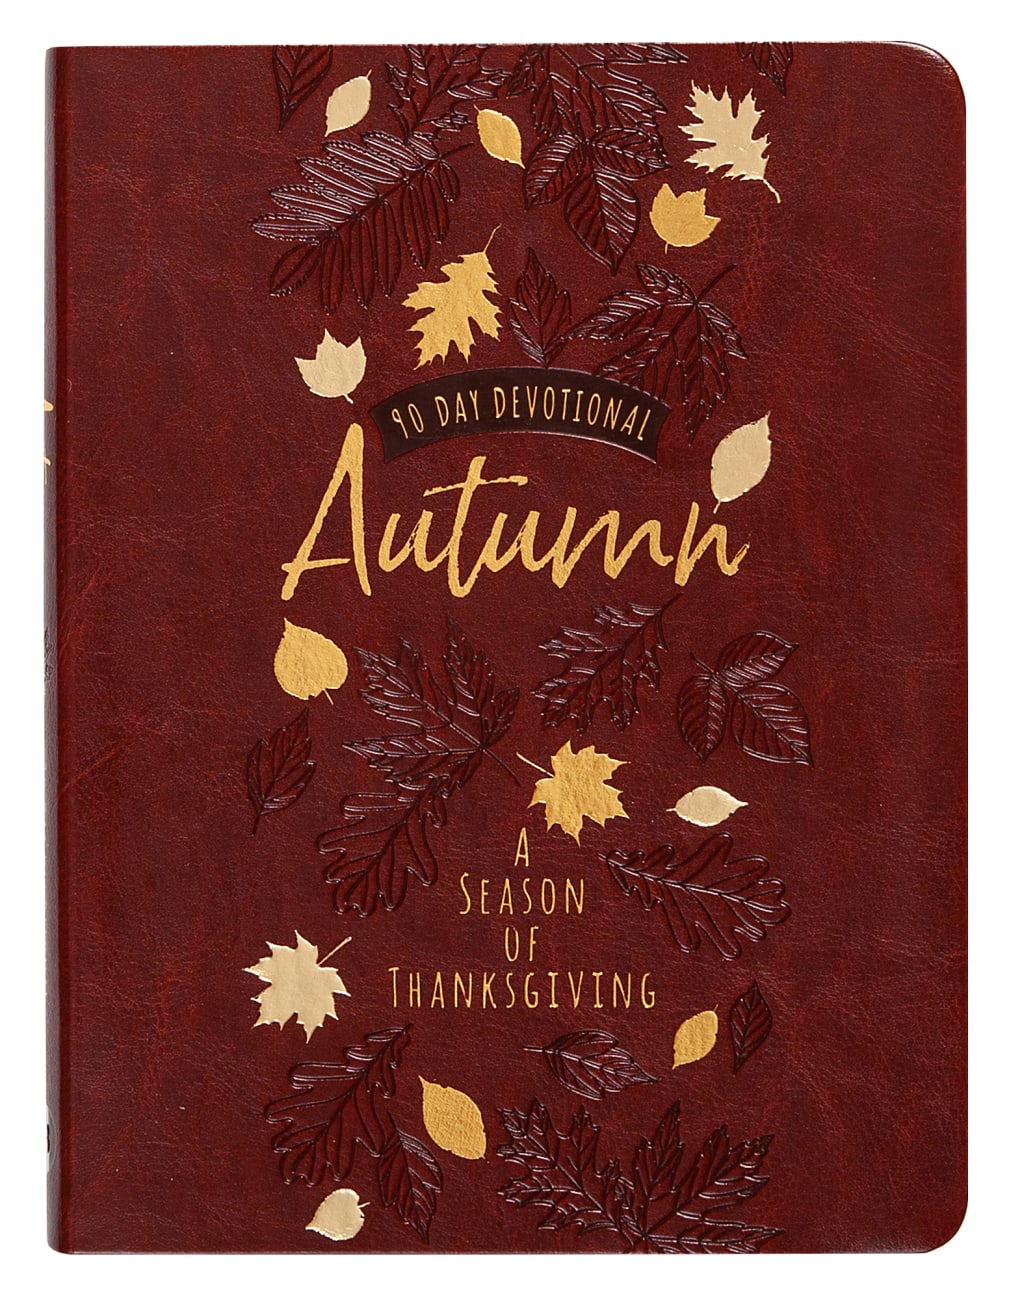 90-Day Devotional: Autumn - a Season of Thanksgiving Imitation Leather